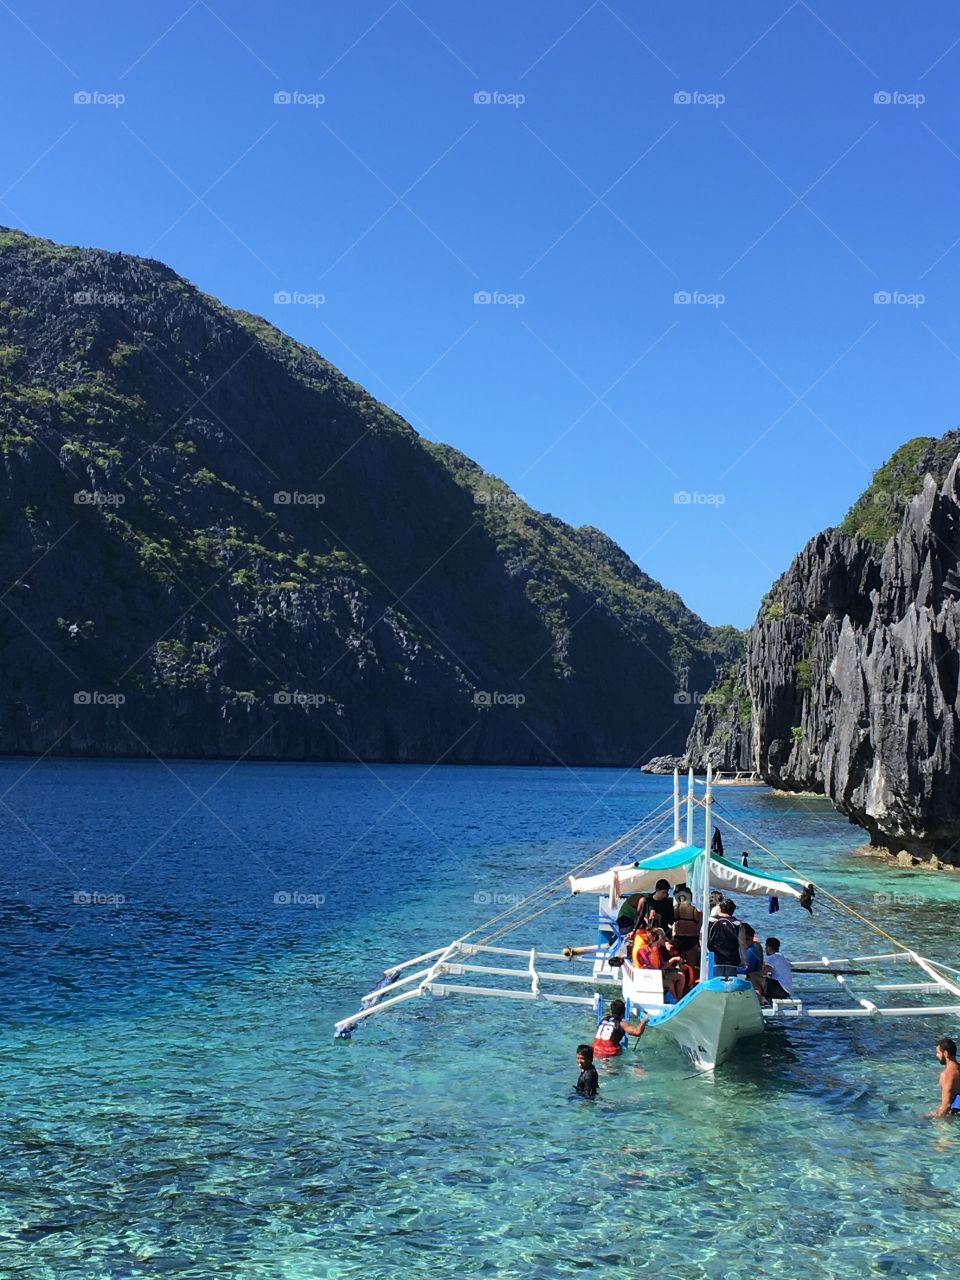 Adventure on seas- exploring the islands of Palawan, Philippines